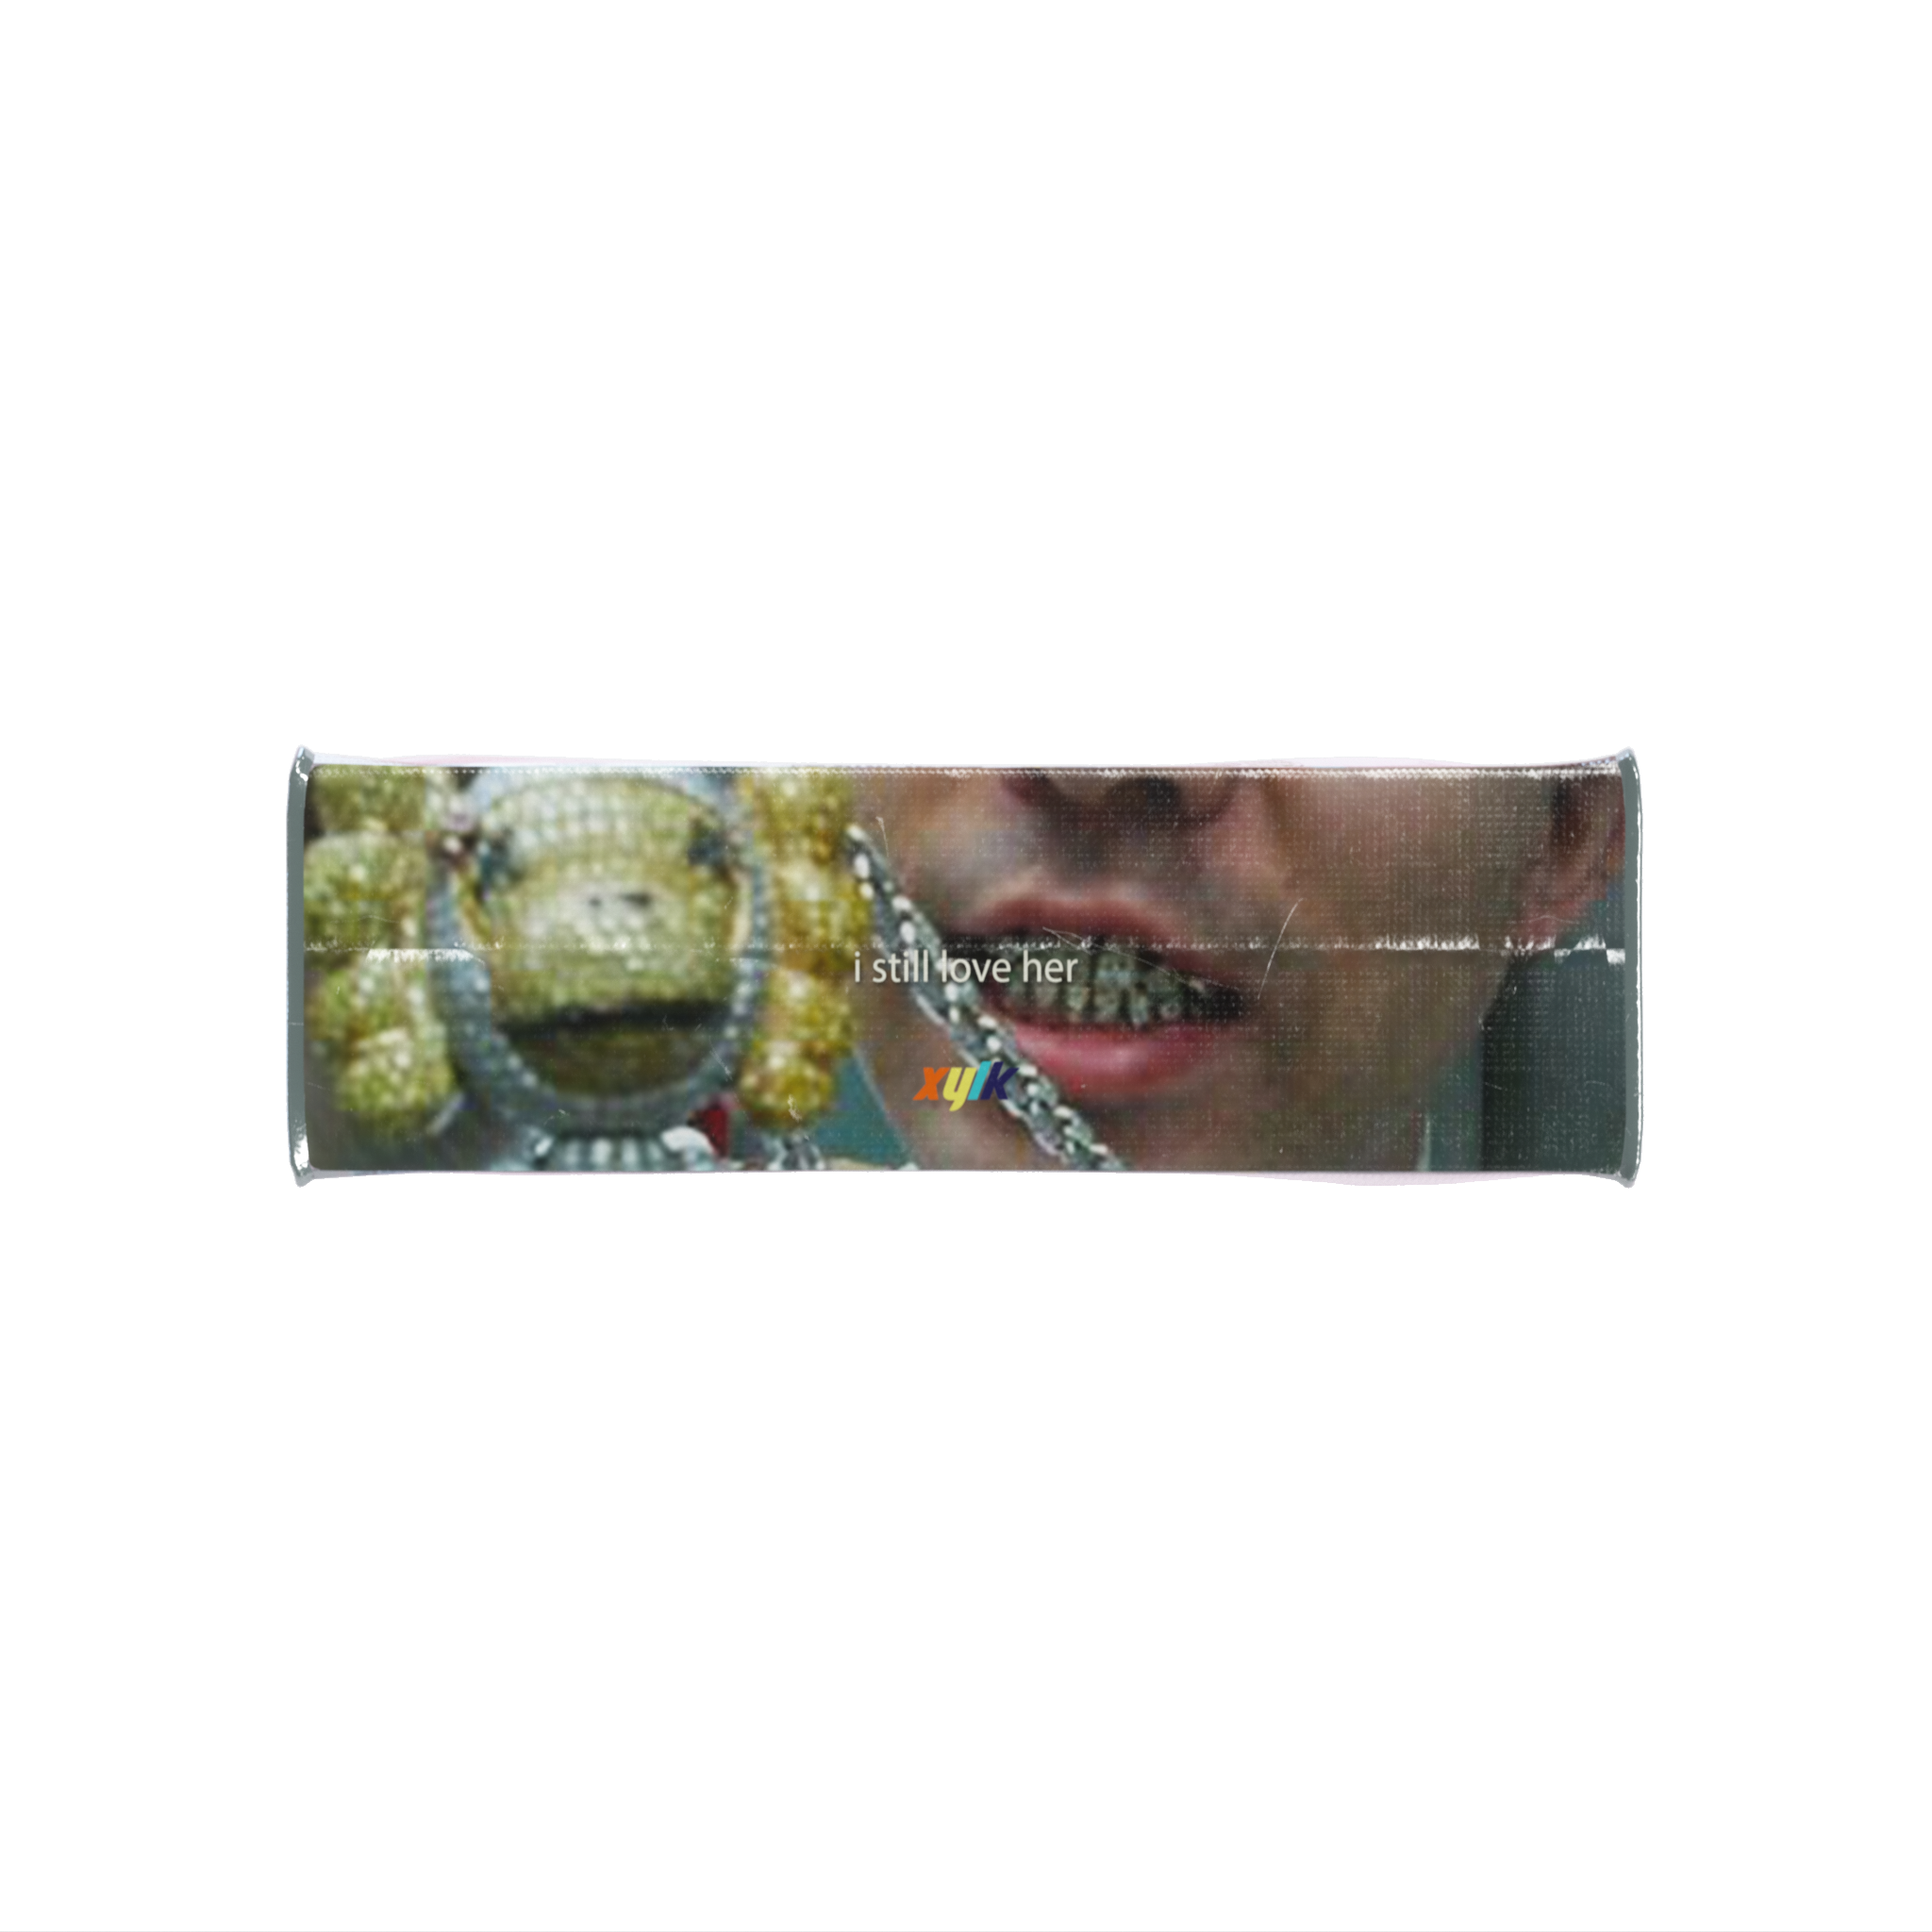 Nigo with BBC Chain Sticker for Sale by originalhype